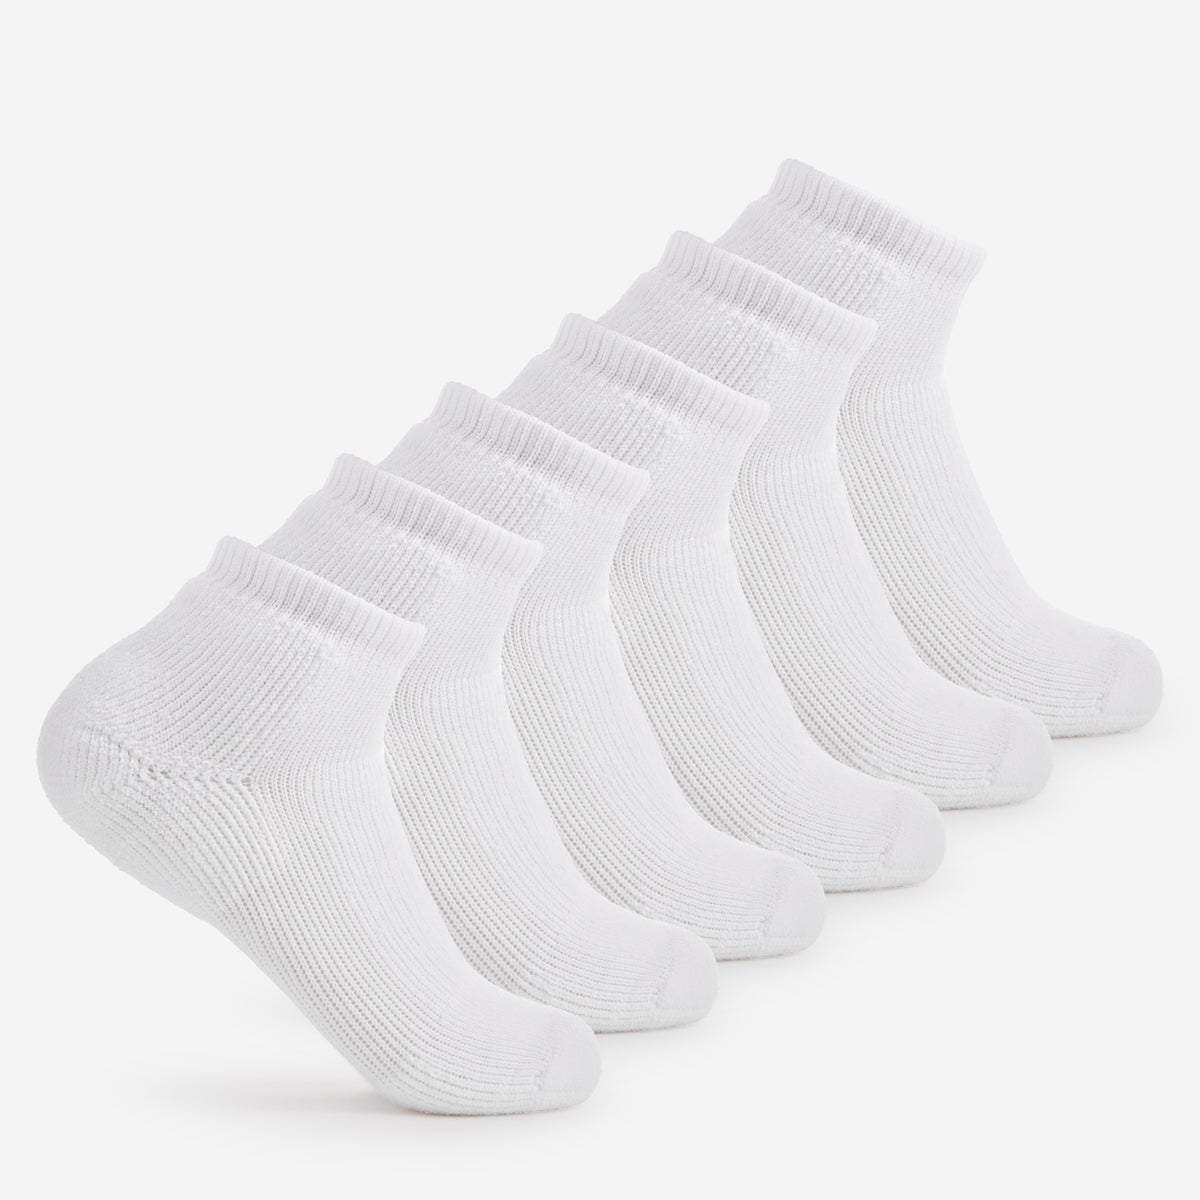 Moderate Cushion Low-Cut Walking Socks (6 Pack) | Thorlo